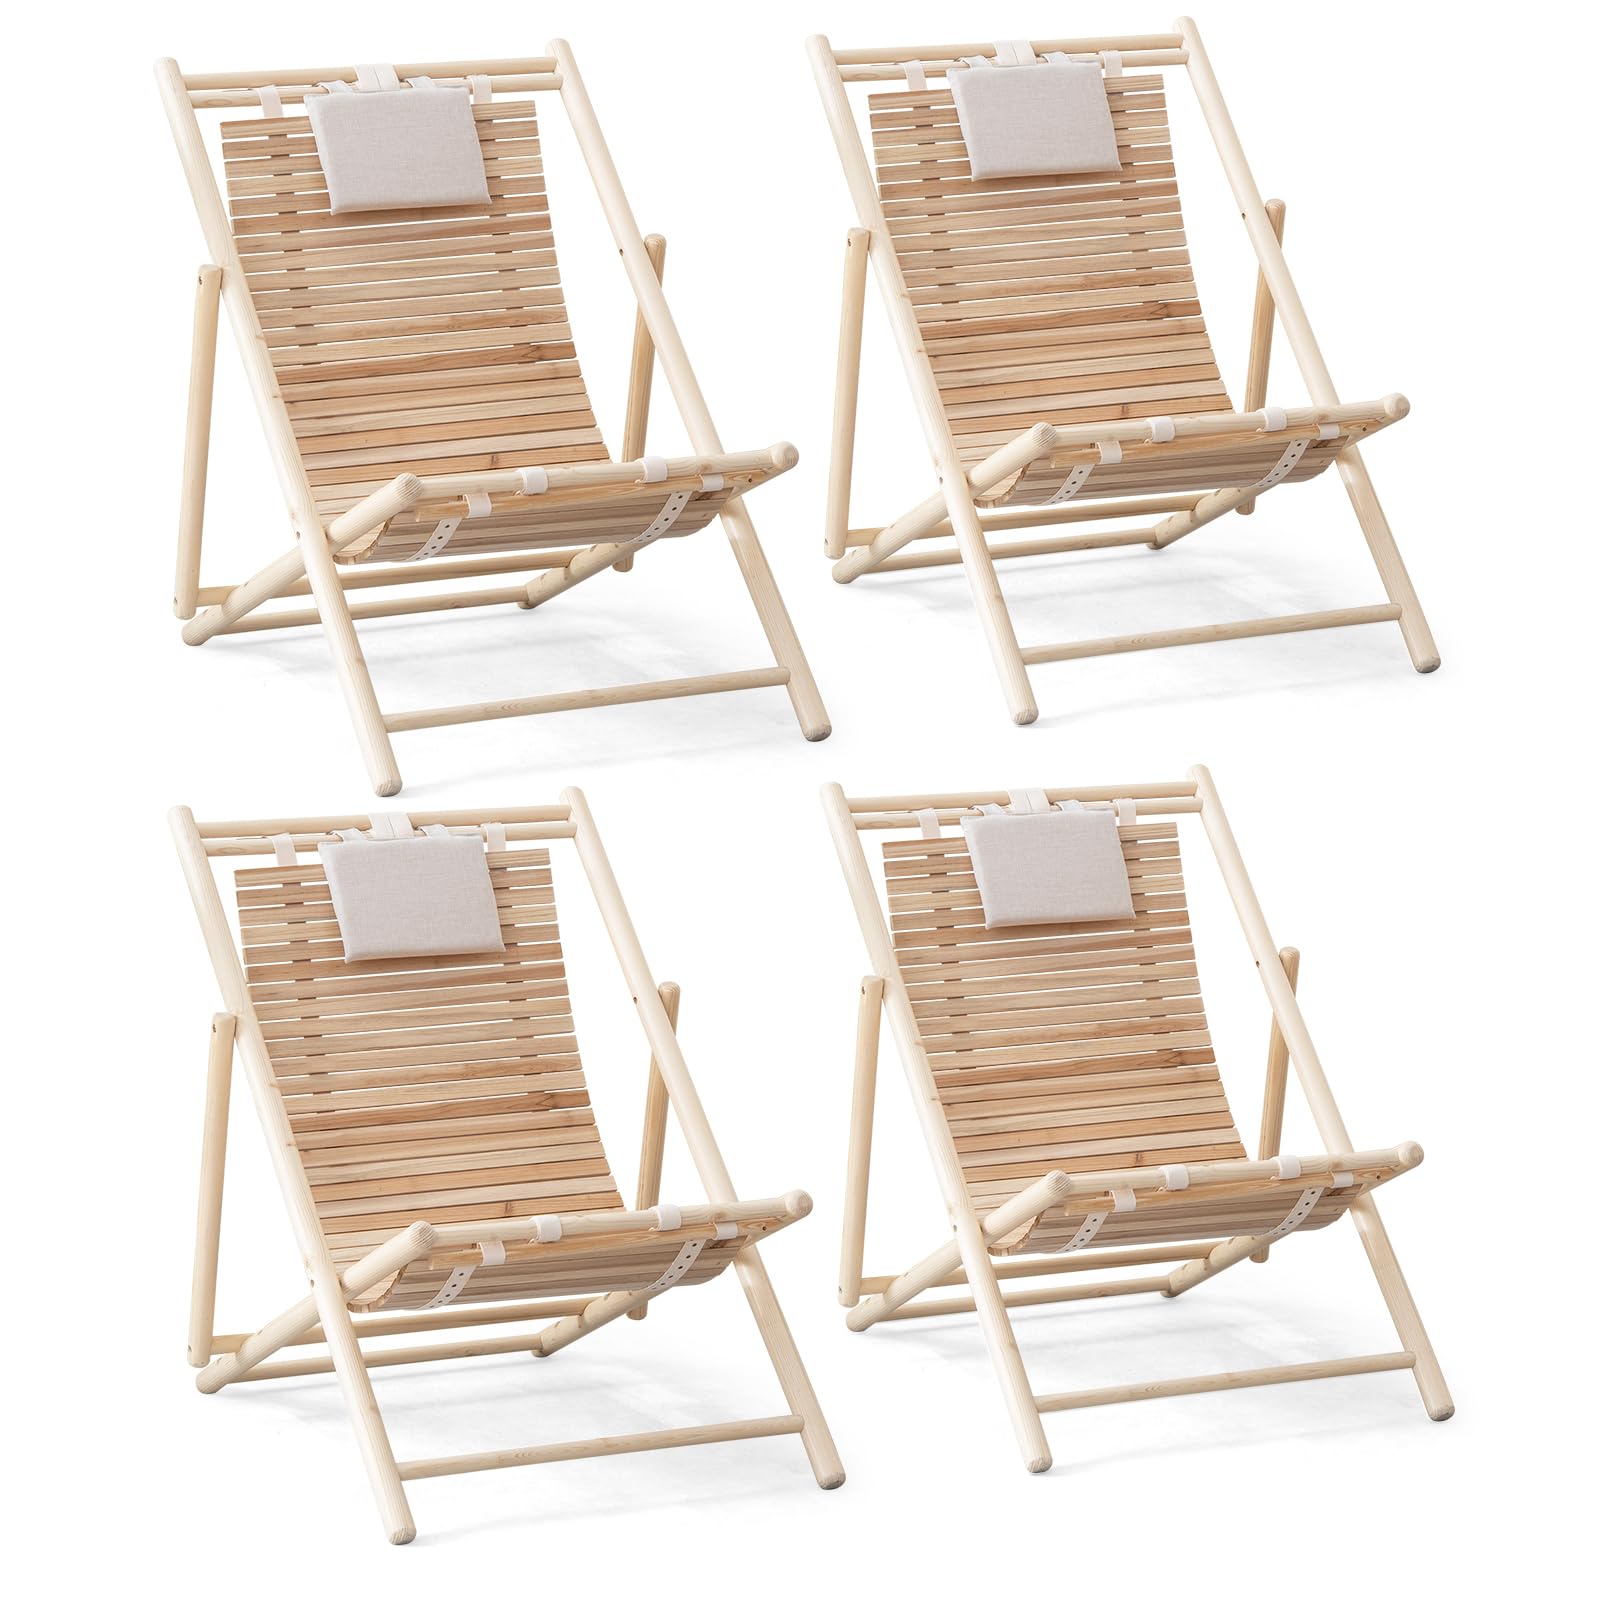 Giantex Wood Lounge Chair Outdoor - Folding Beach Chair with Detachable Headrest